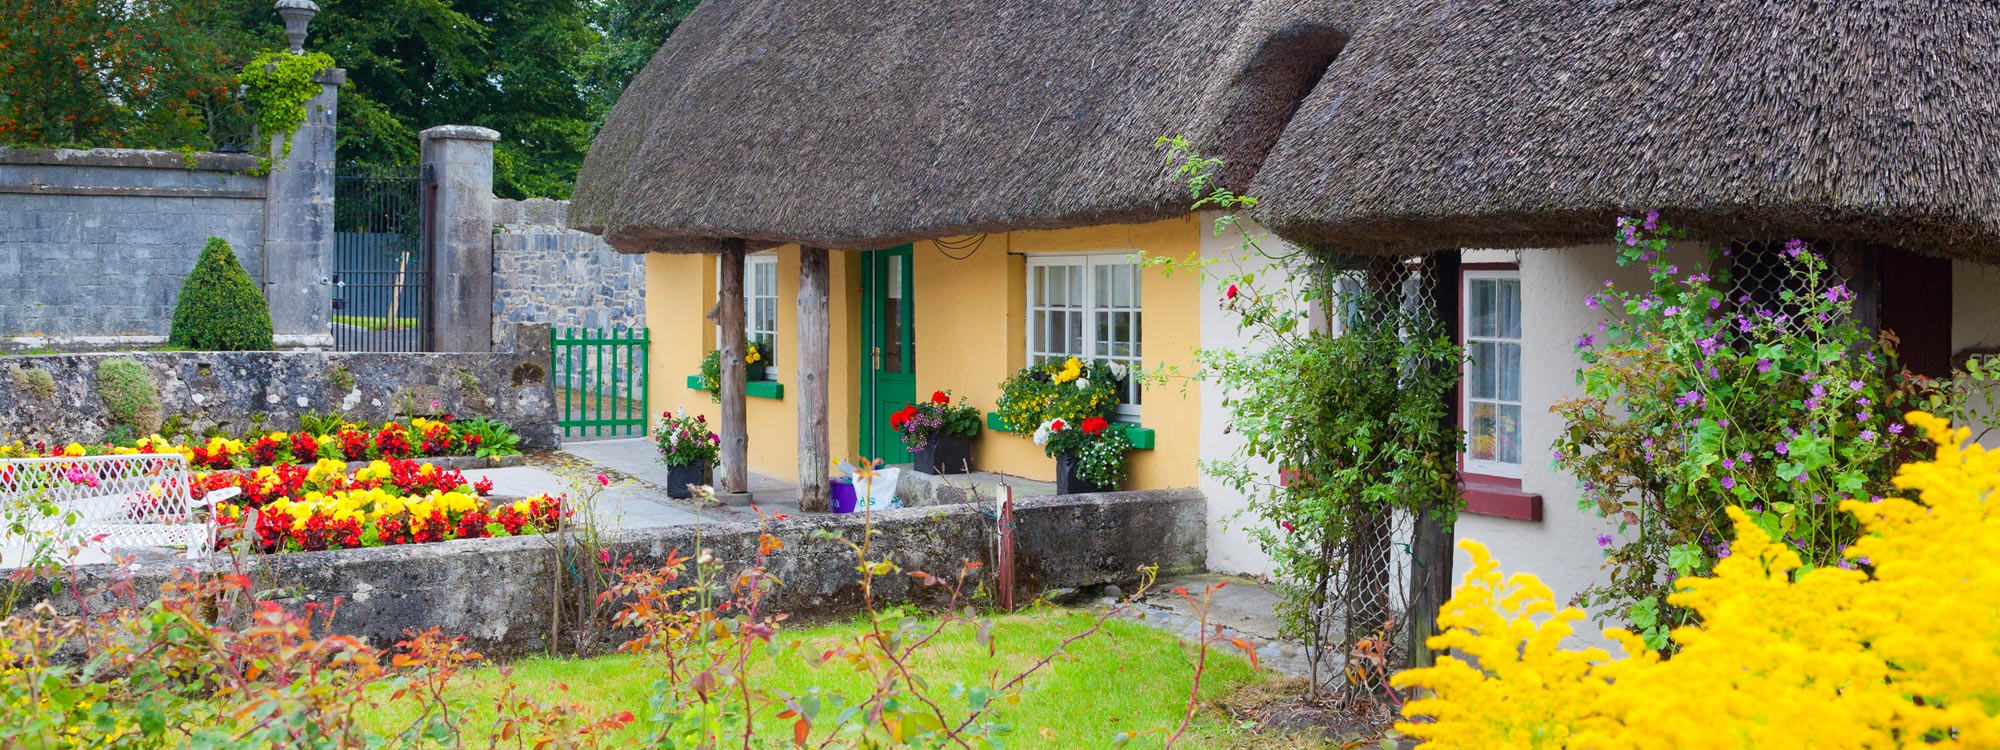 Ferienhaus in Irland